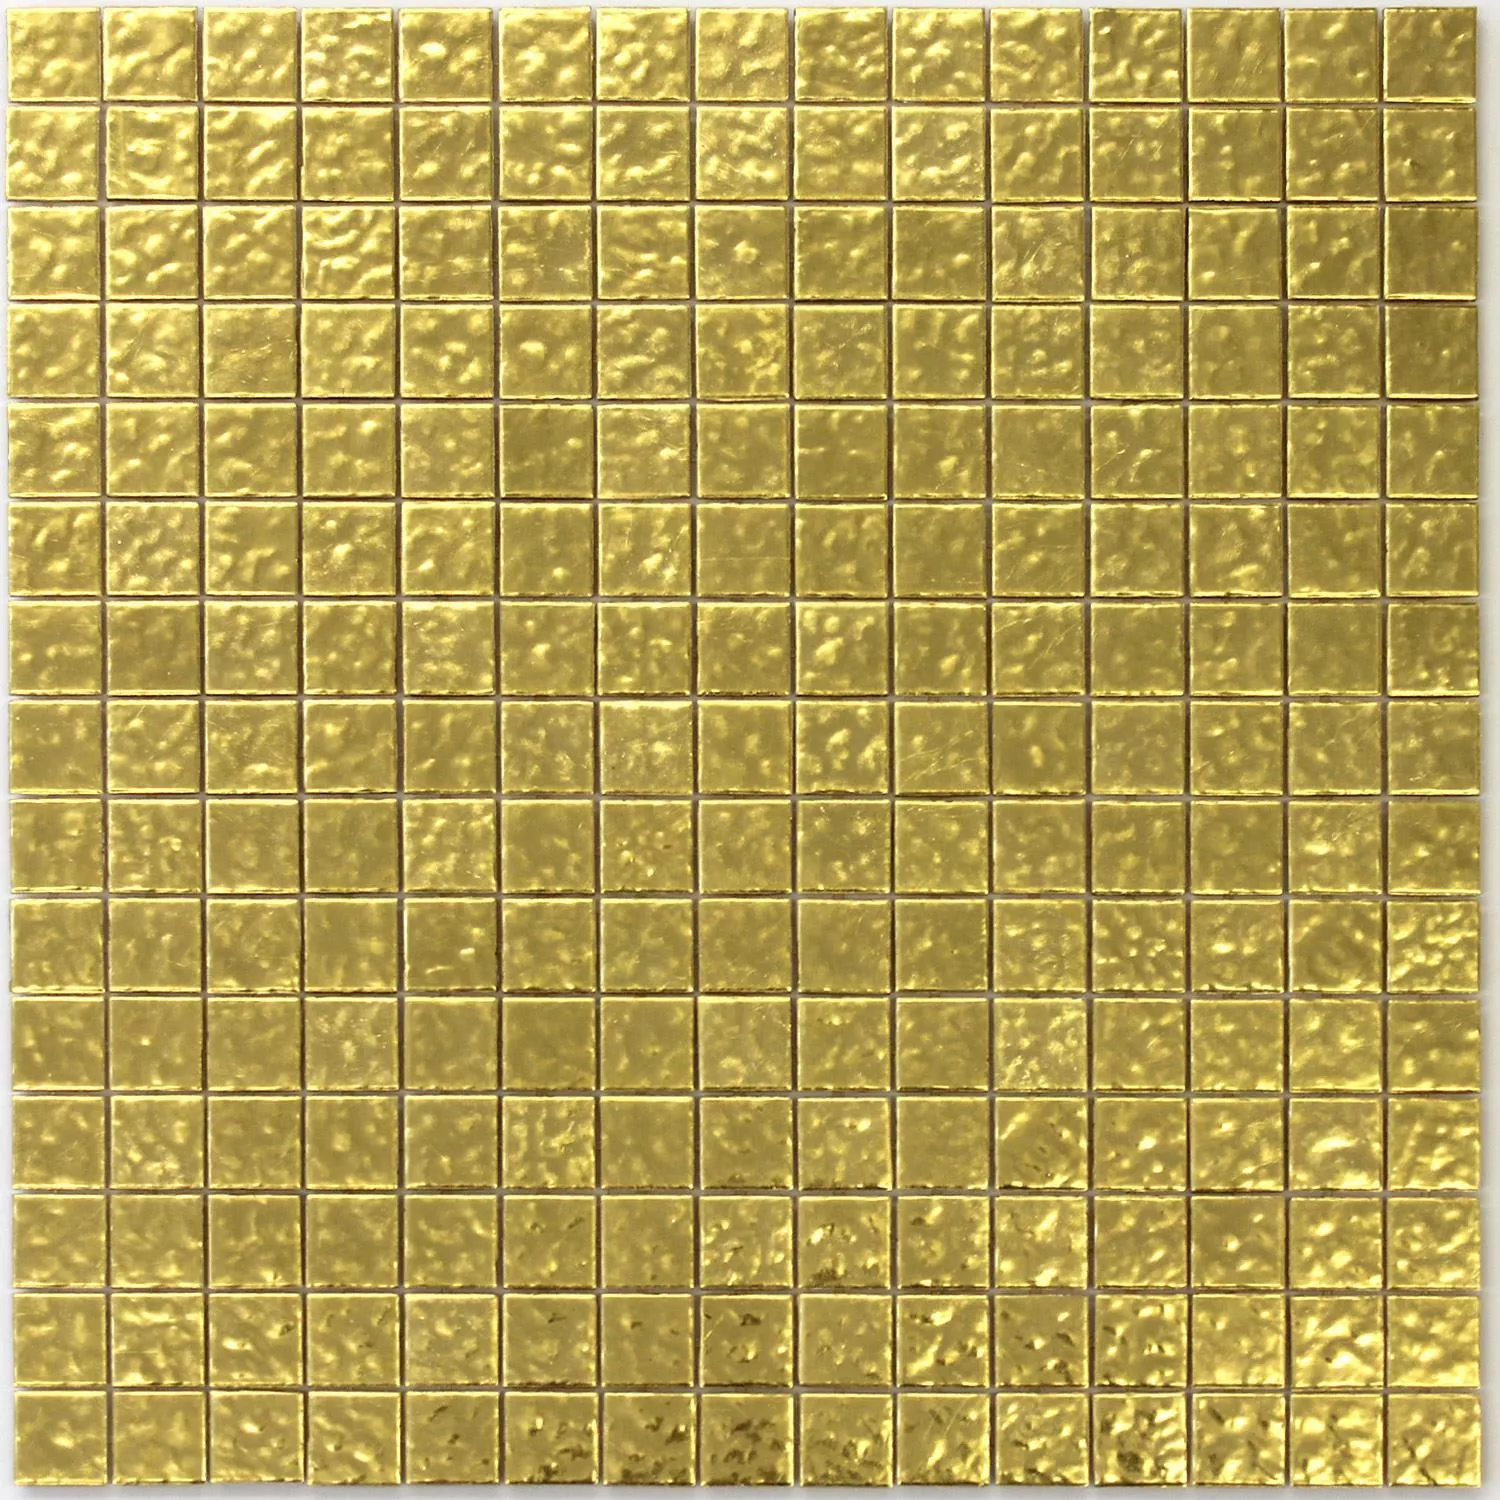 Mozaik Pločice Trend-Vi Staklo Zlatni Listići 24 Karat 2x2cm